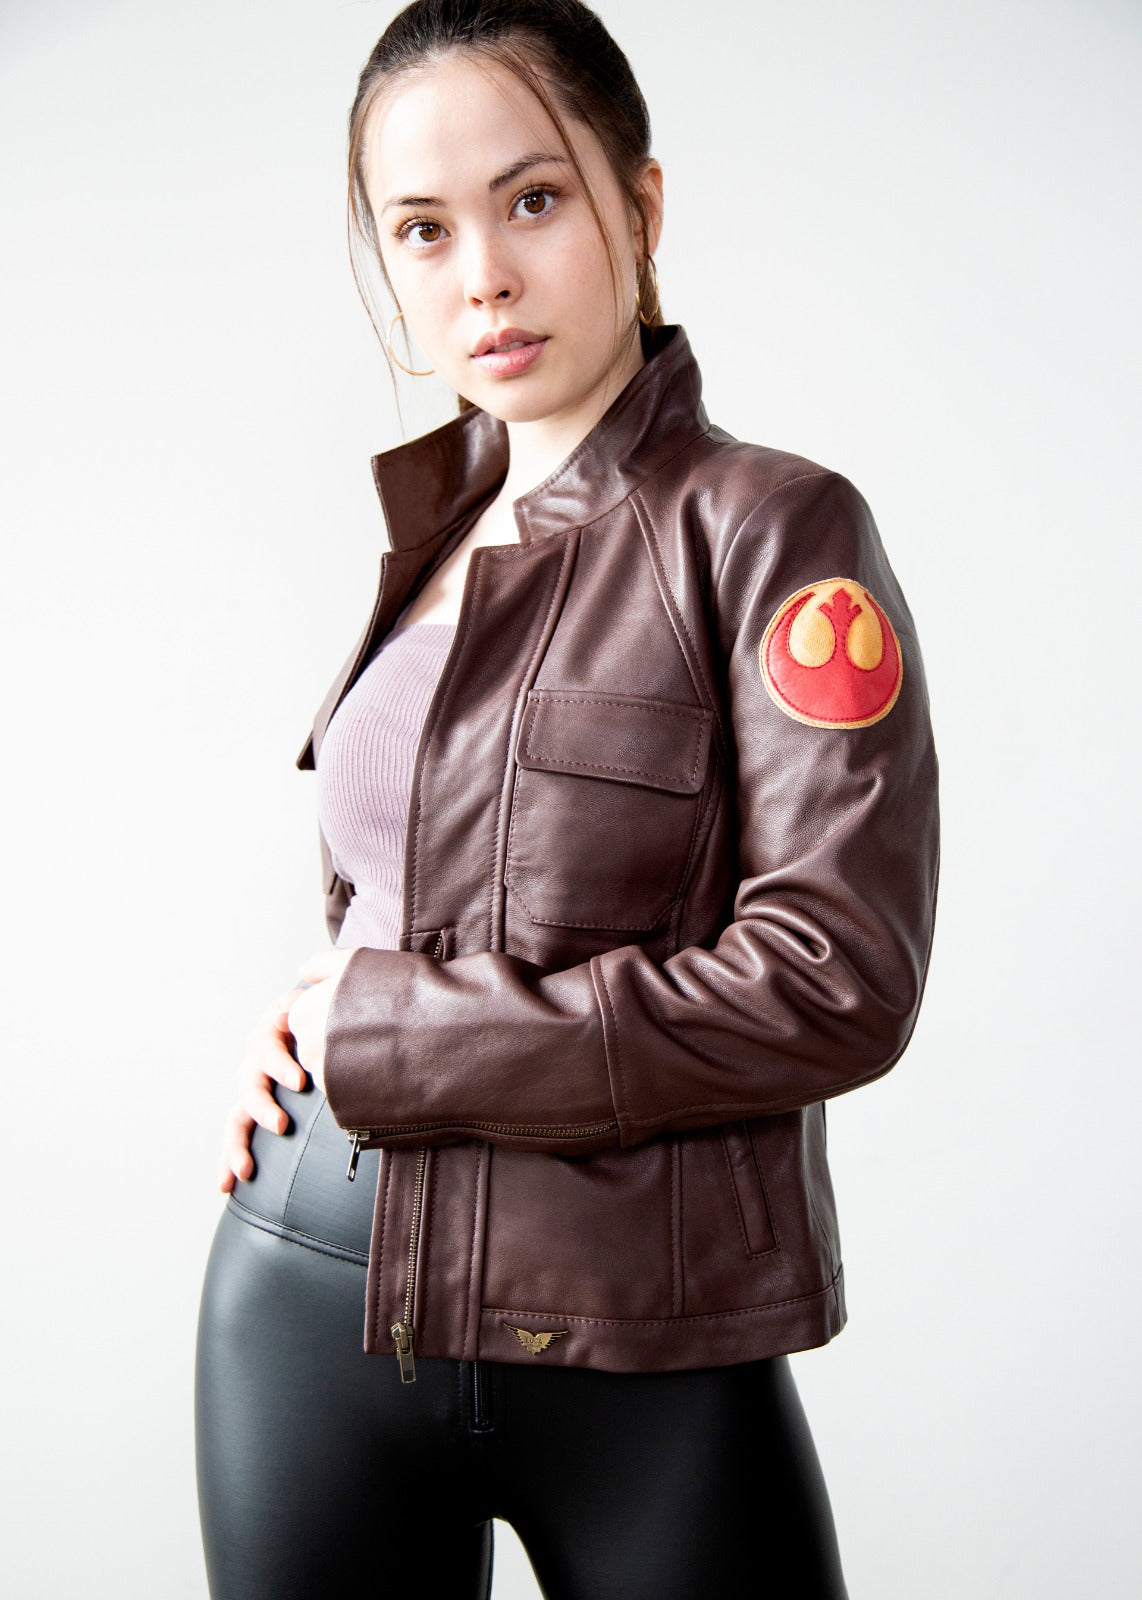 Womens Poe Dameron Rebel Alliance Brown Leather Jacket Starbird Insignia